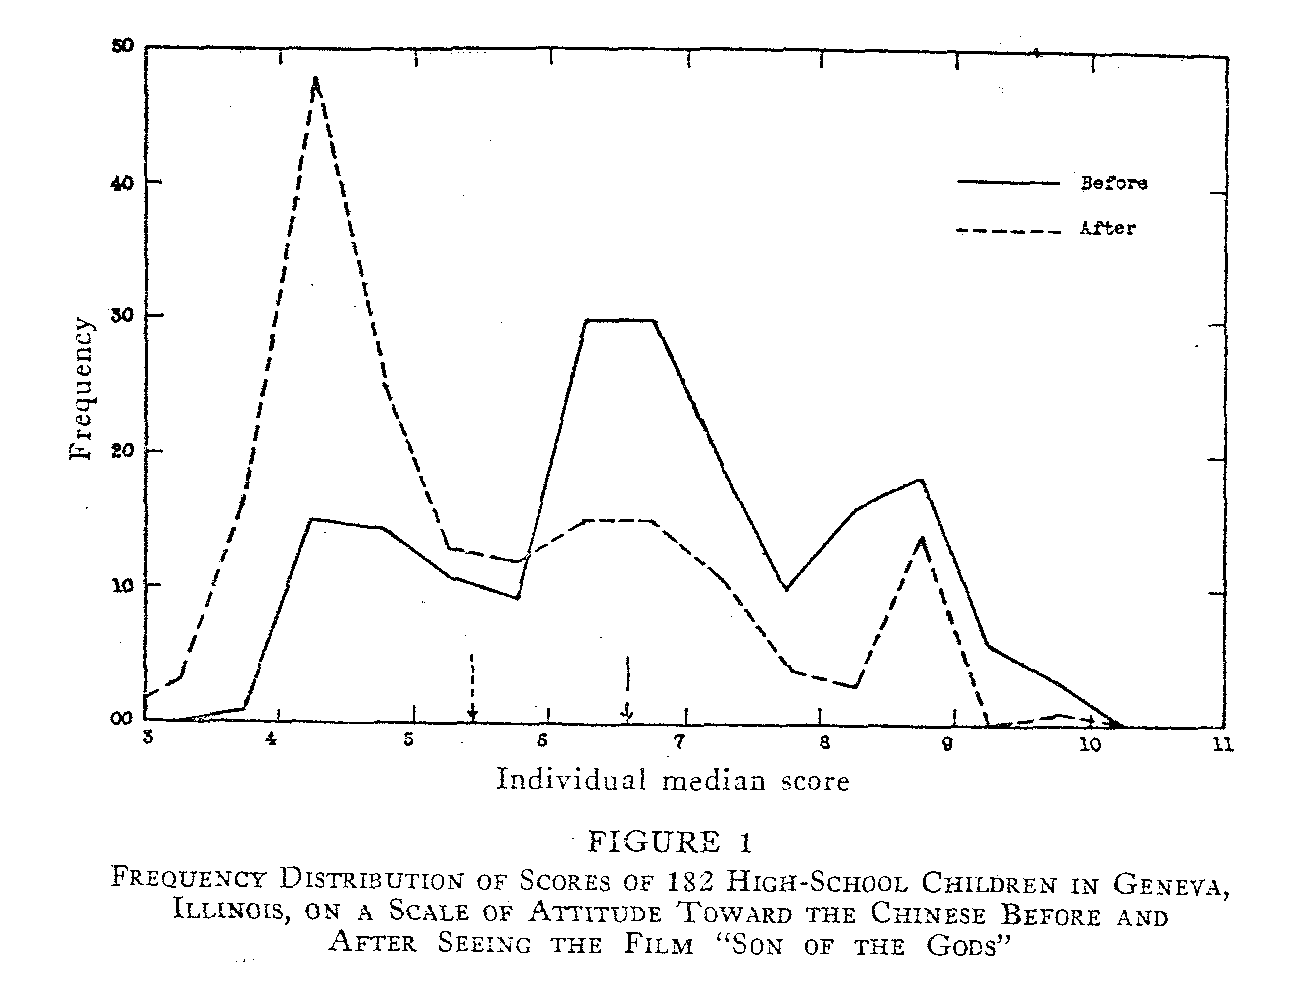 Figure 1 Distribution of Individual Median Scores